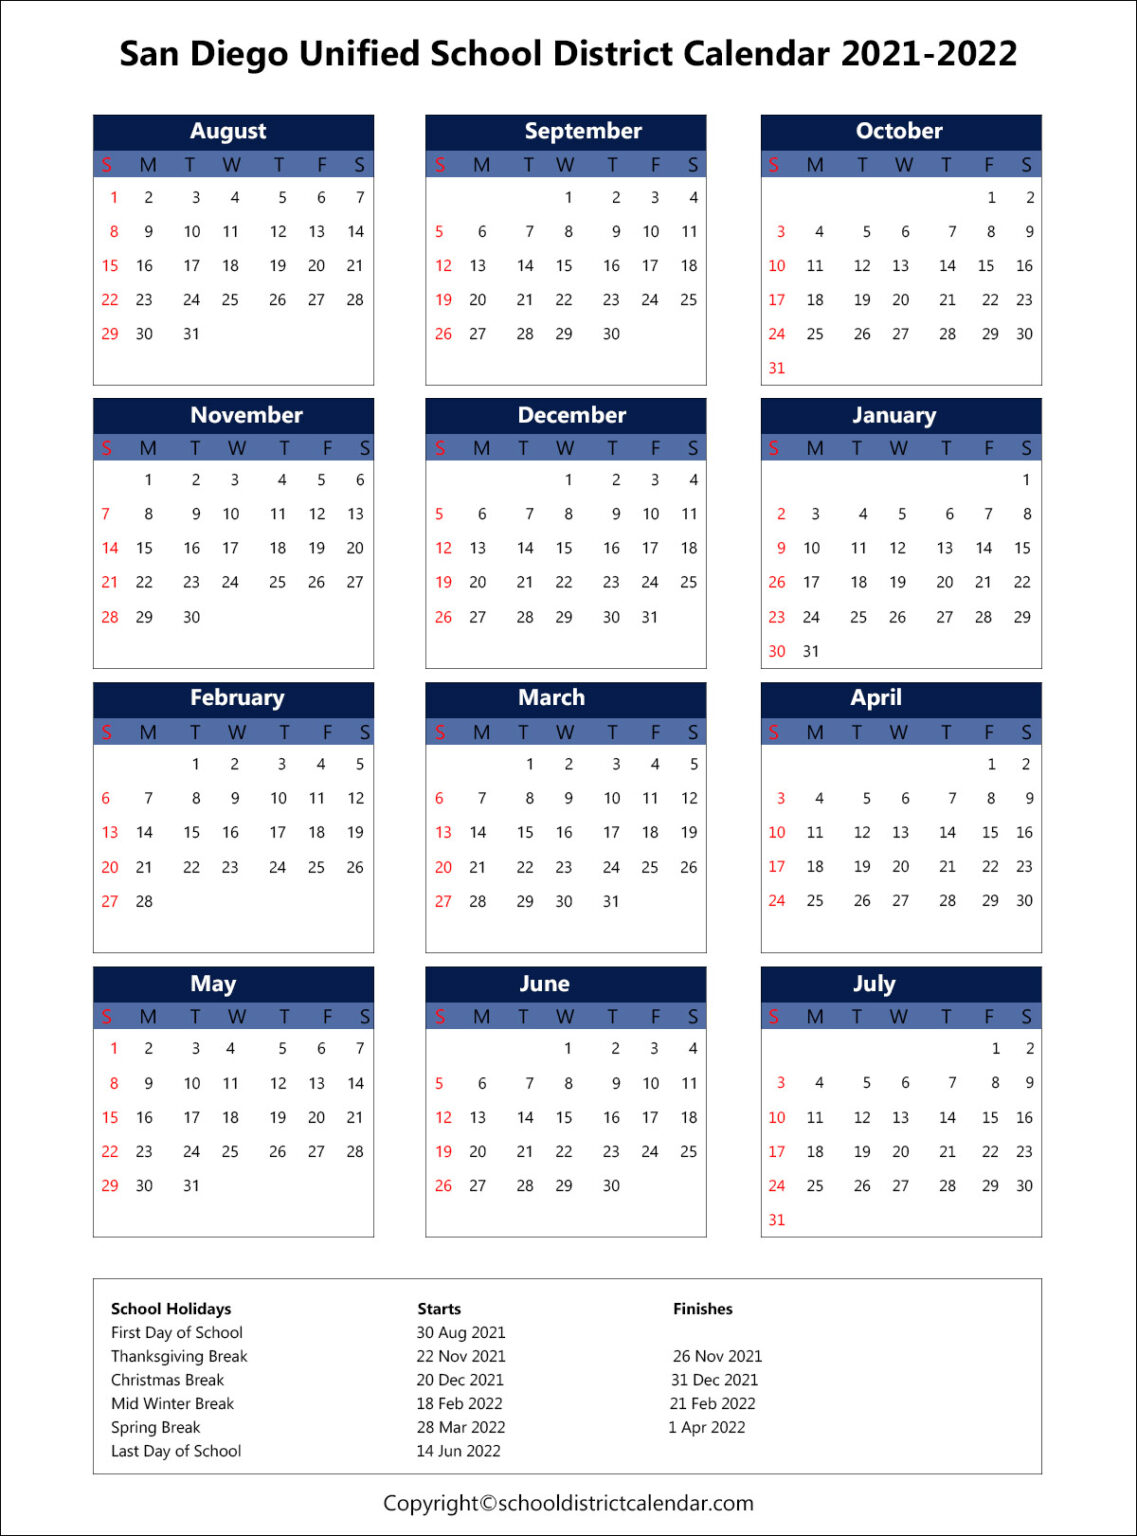 San Diego Unified School District Calendar Holidays 2021-2022